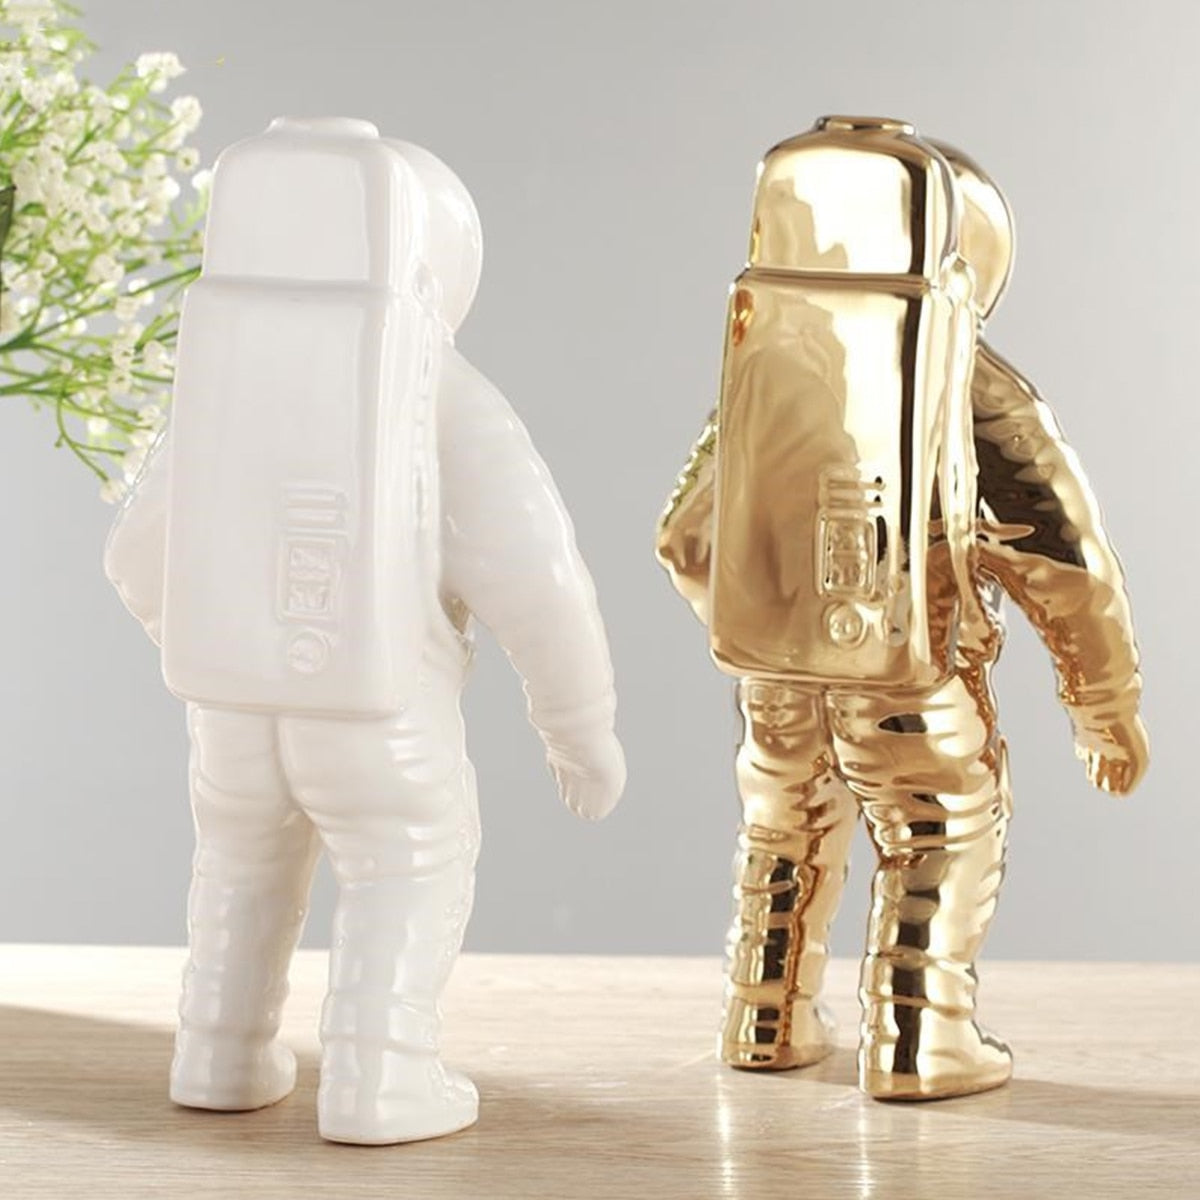 Gold Space Man Sculpture Astronaut Vas Seramik Kreatif Model Model Modern Model Ornament Patung Tabletop Home Hiasan